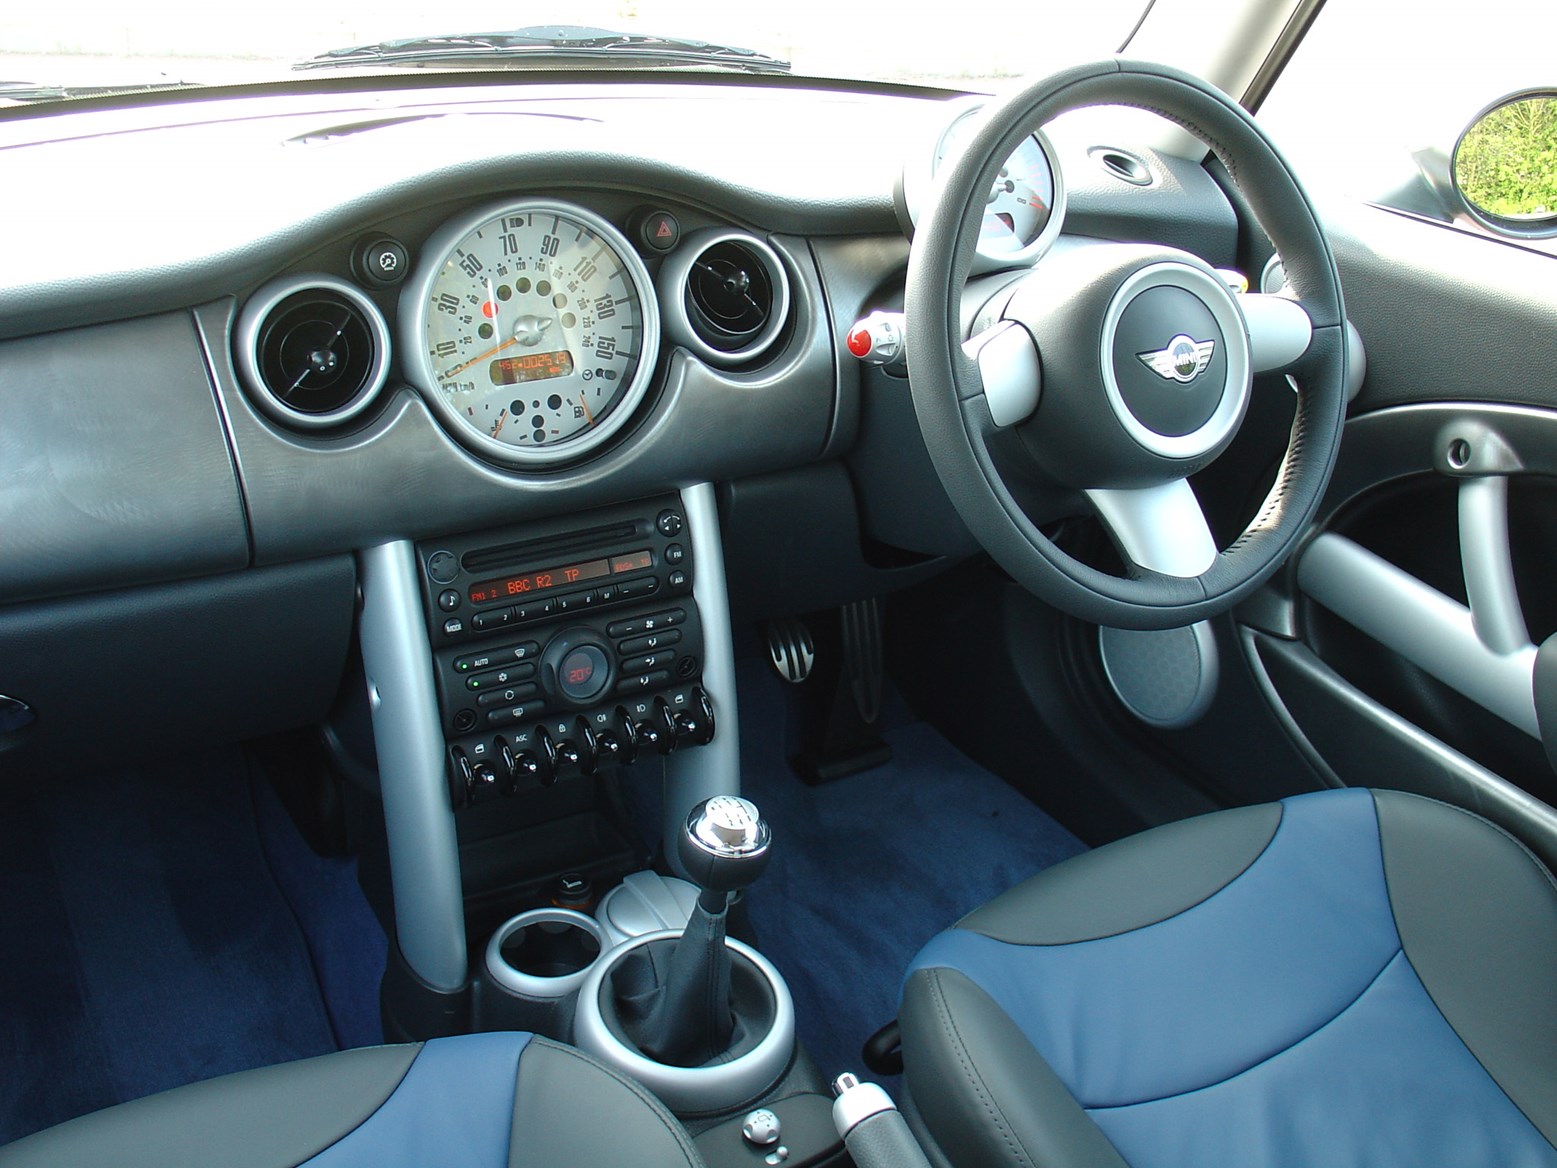 2003 Mini Cooper S Interior New Used Car Reviews 2018